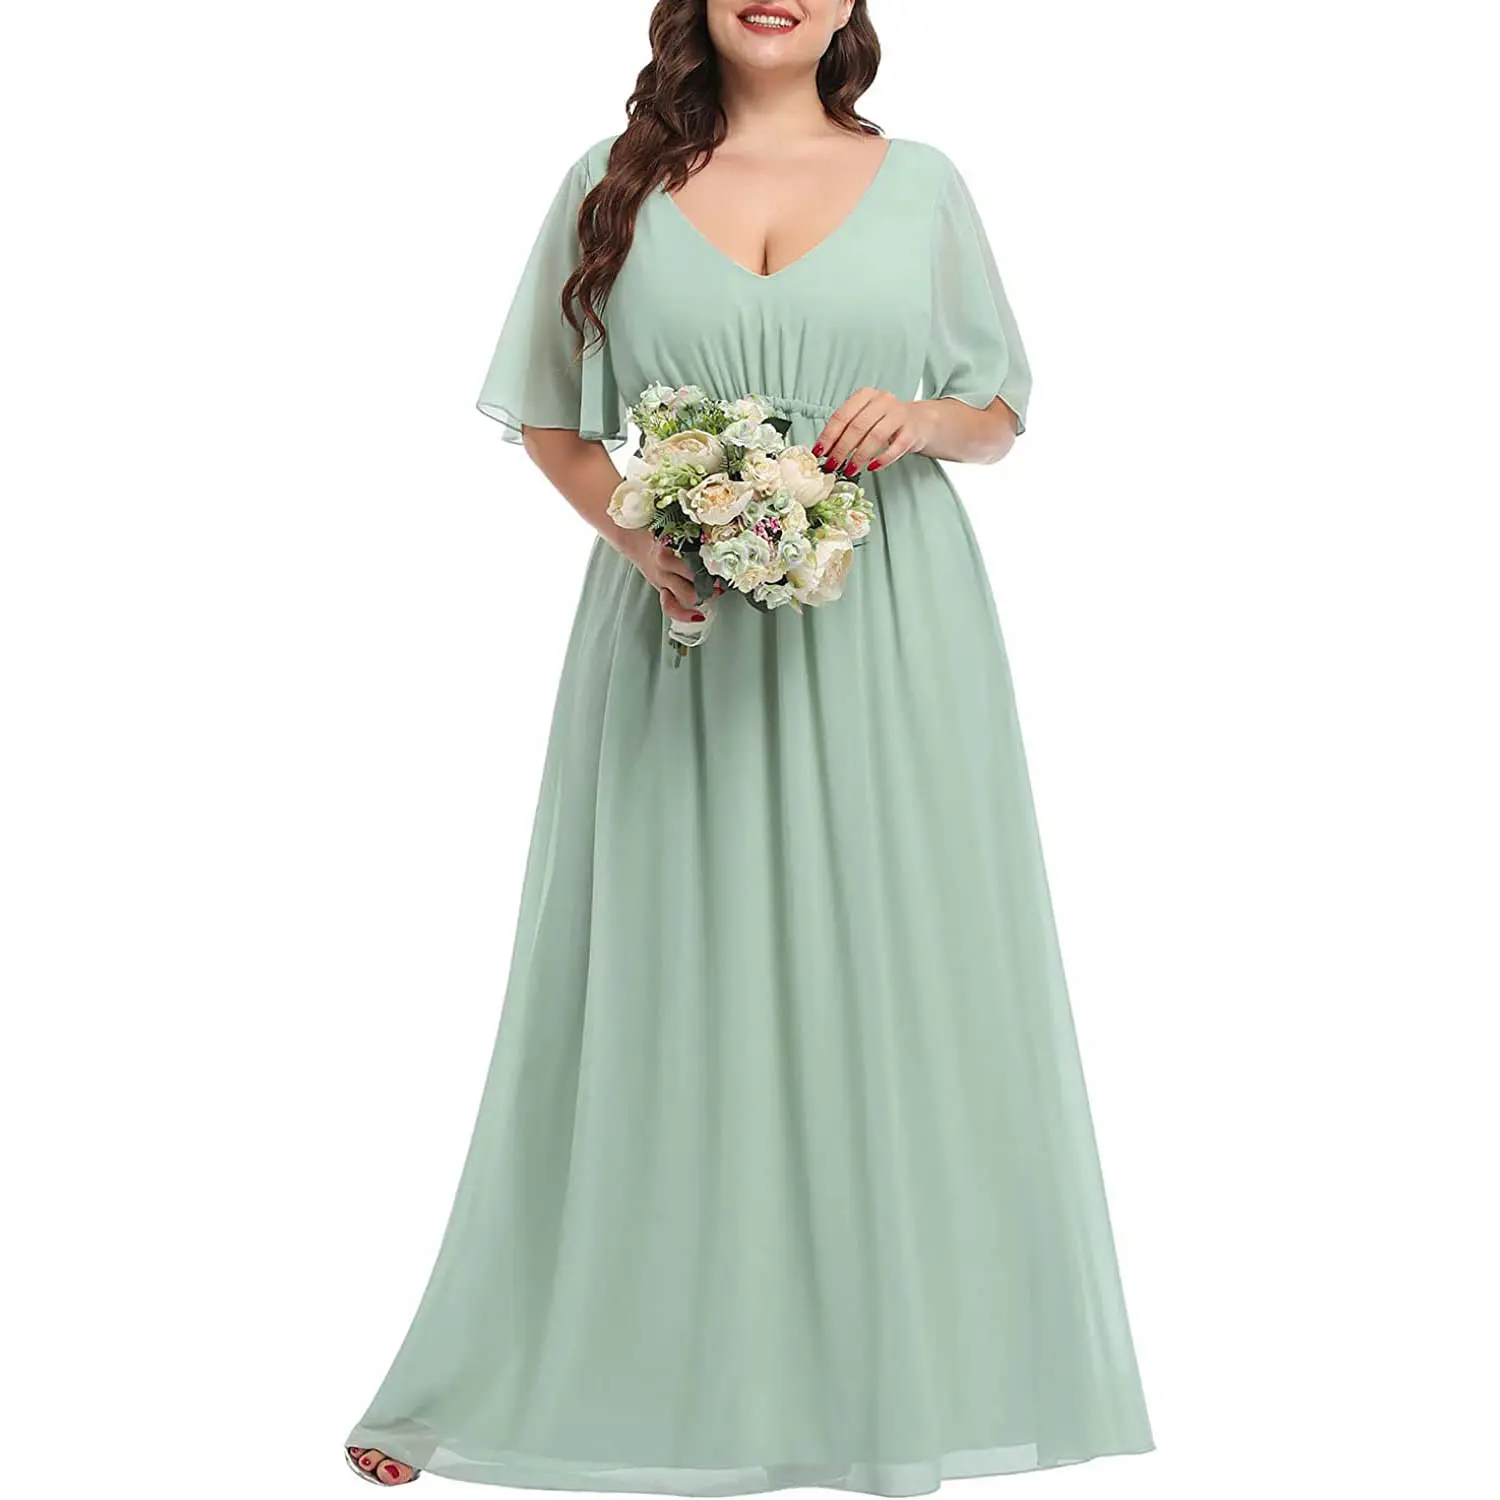 Vestido feminino formal, senhoras elegante casual verde chiffon vestido de festa plus size longo maxi vestido para a noite vestido para mulheres gordas